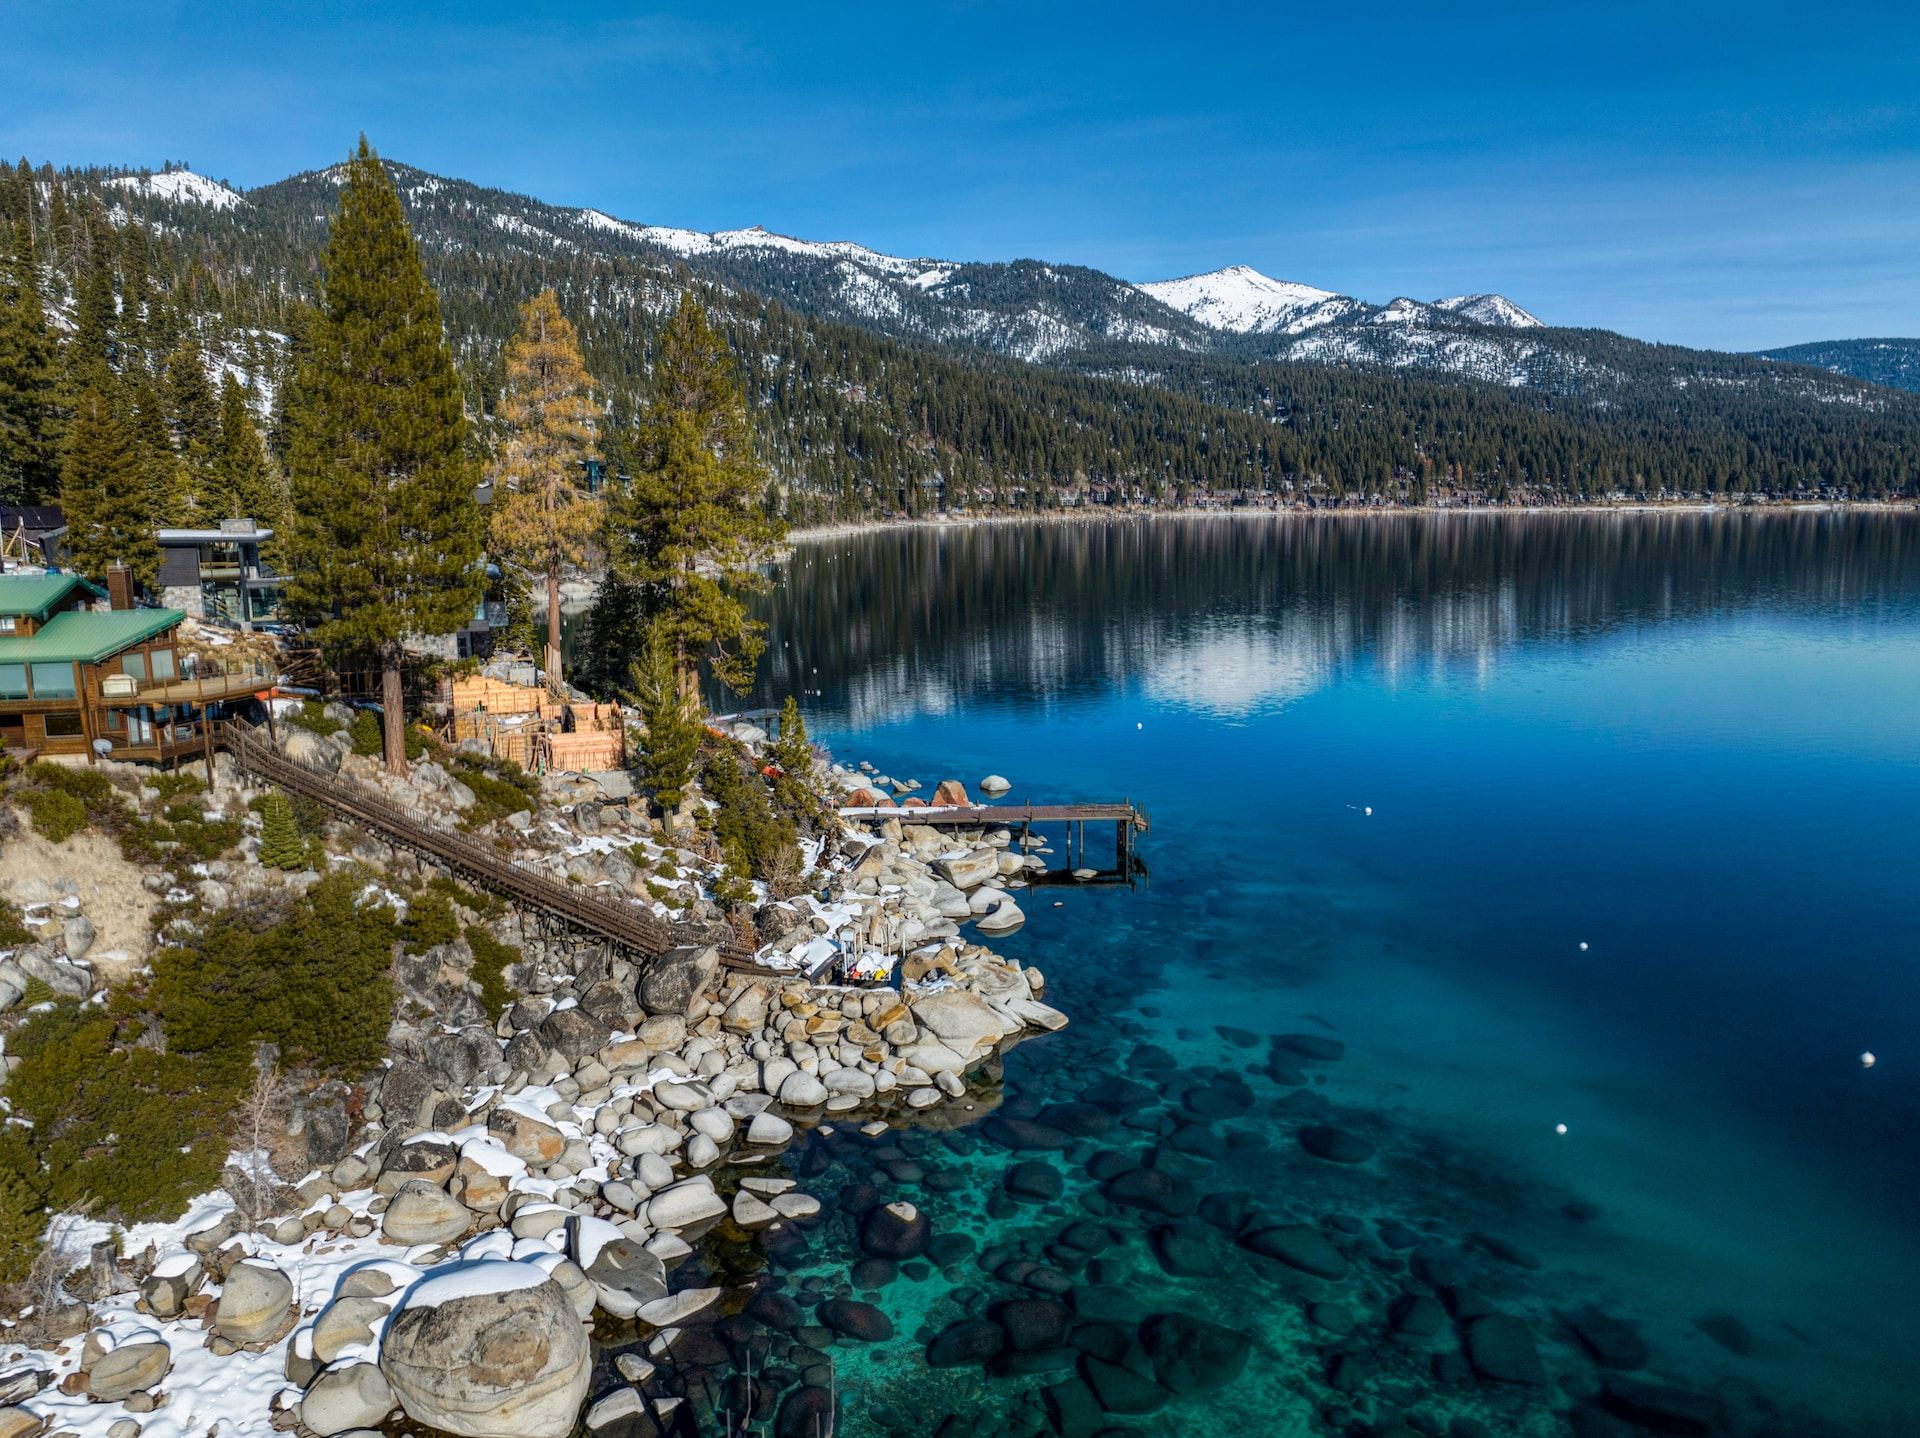 Donner lake in Truckee, Lake Tahoe, California, USA